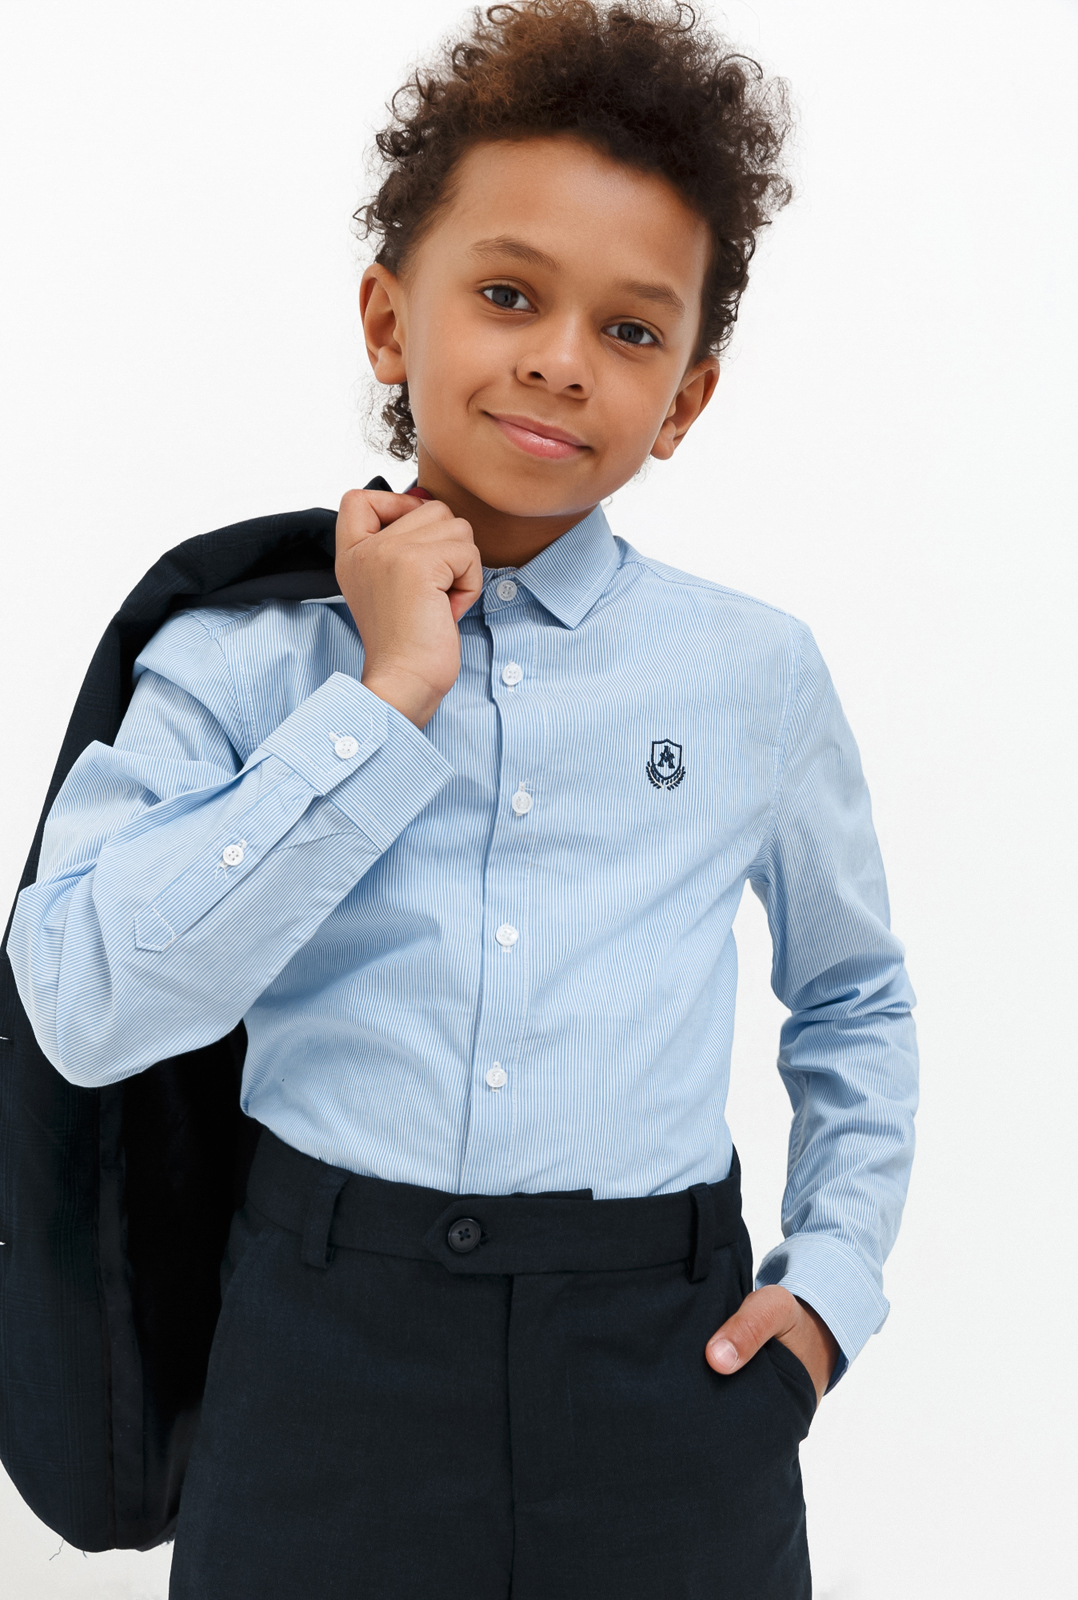 Рубашка для мальчика Acoola Lowell, цвет: синий. 20140280036_500. Размер 158